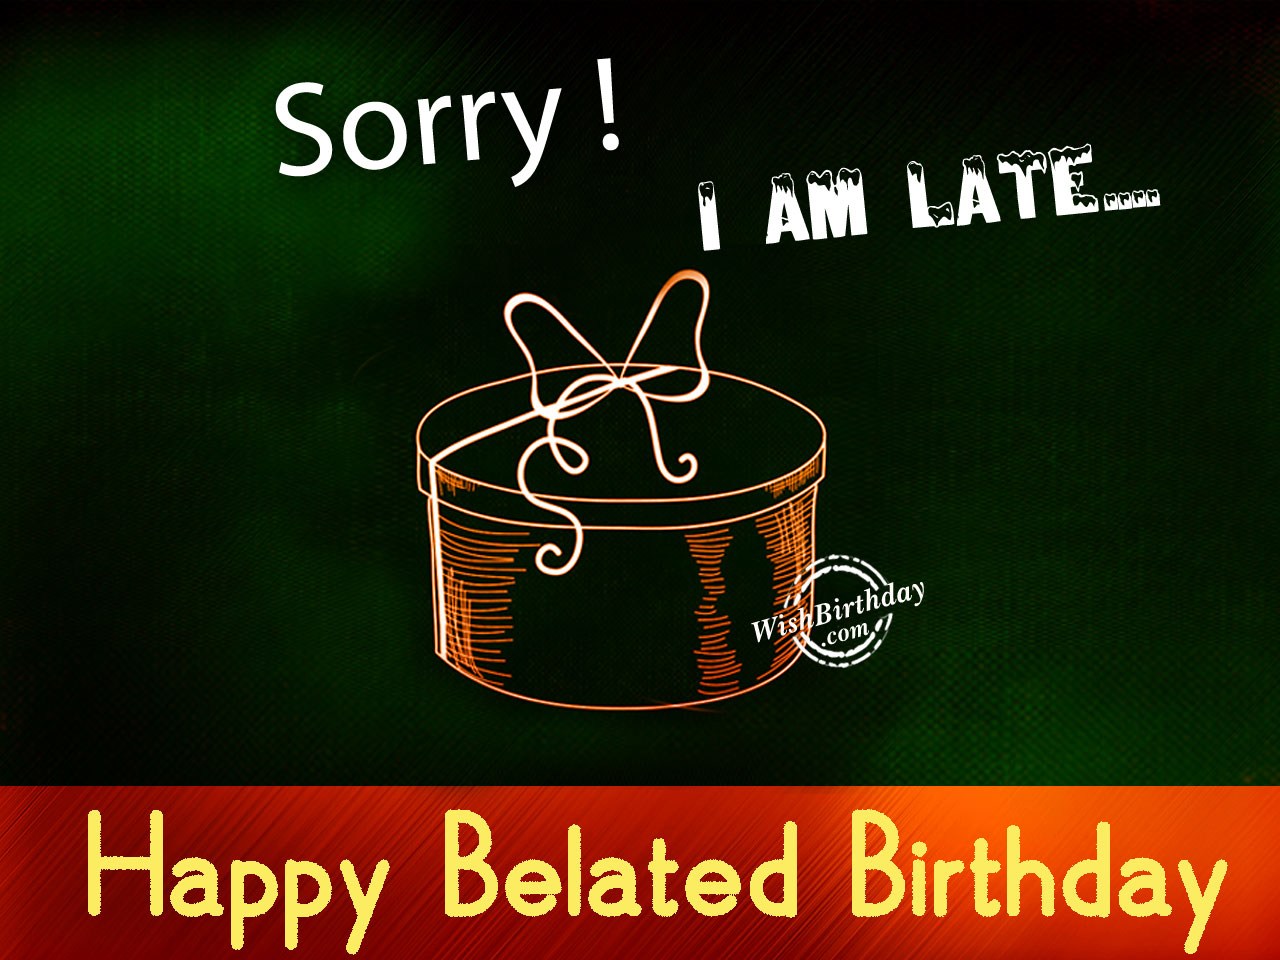 Sorry I am late Happy belated birthday - Birthday Wishes, Happy ...